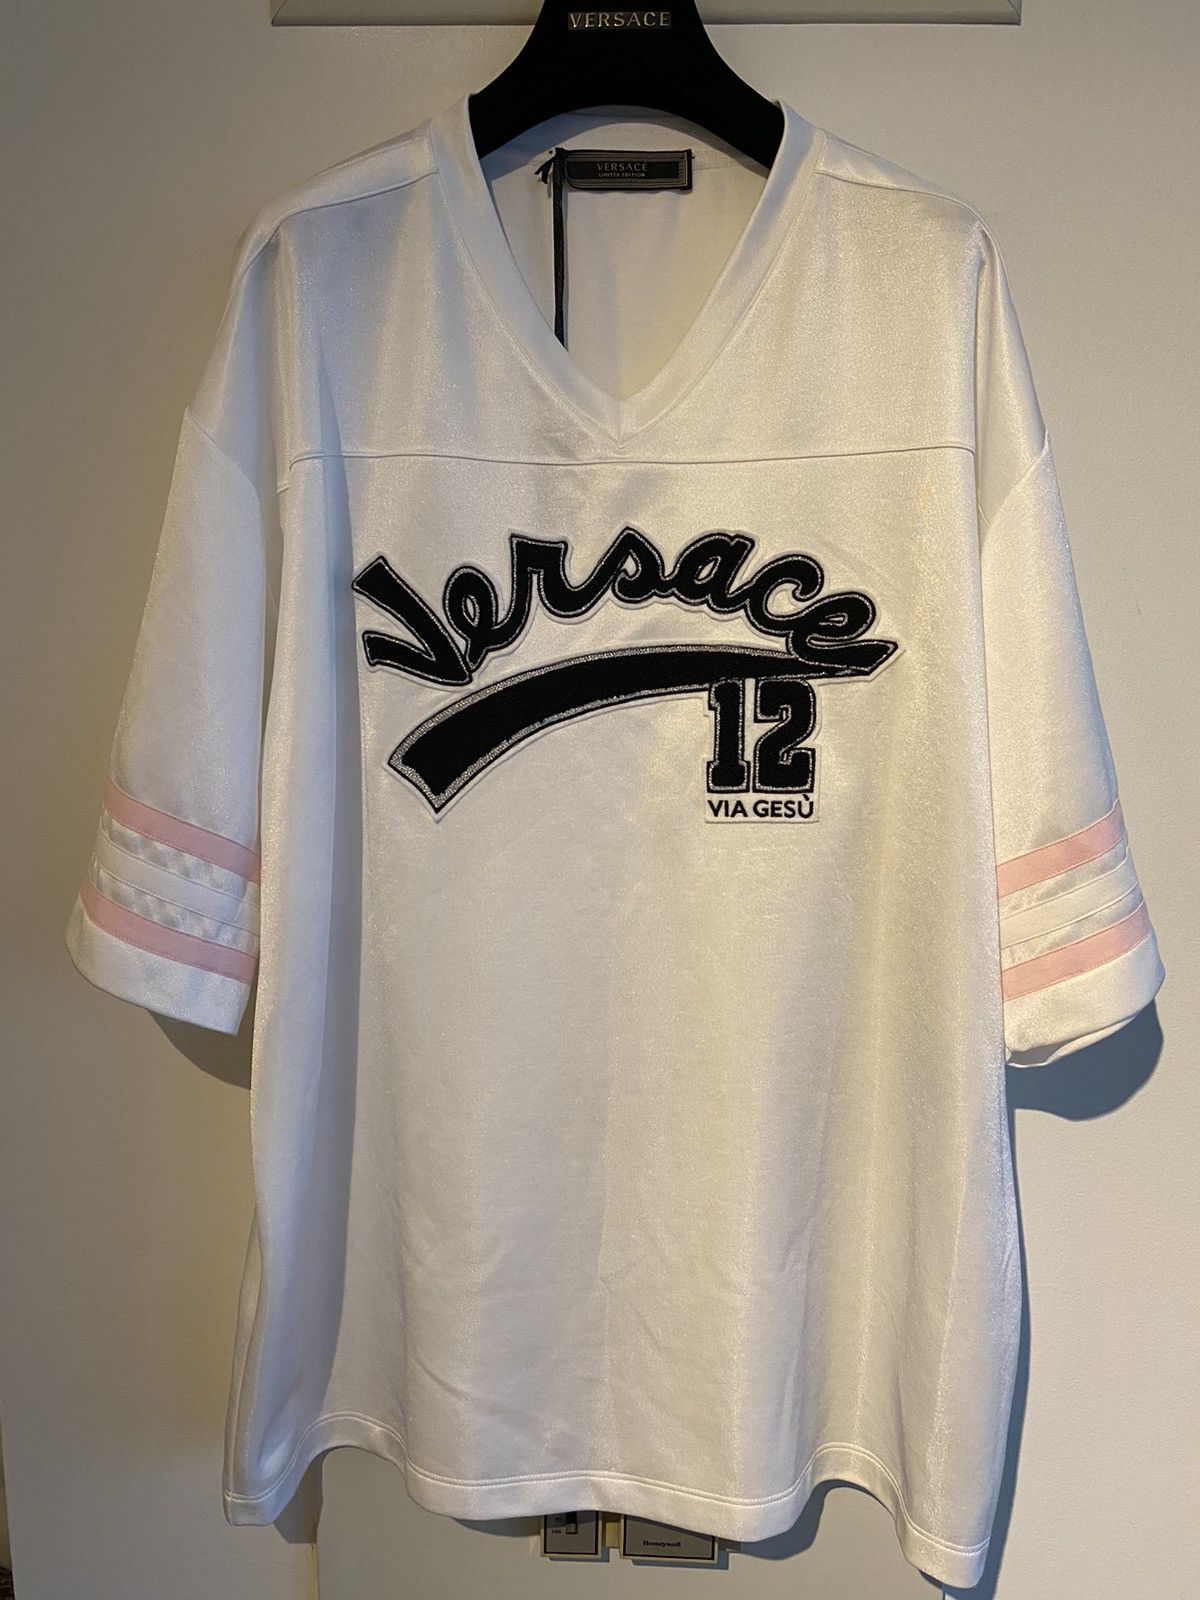 Versace Limited Edition Via Gesu Runway Jersey T-shirt $1,050 New Size US L / EU 52-54 / 3 - 8 Thumbnail